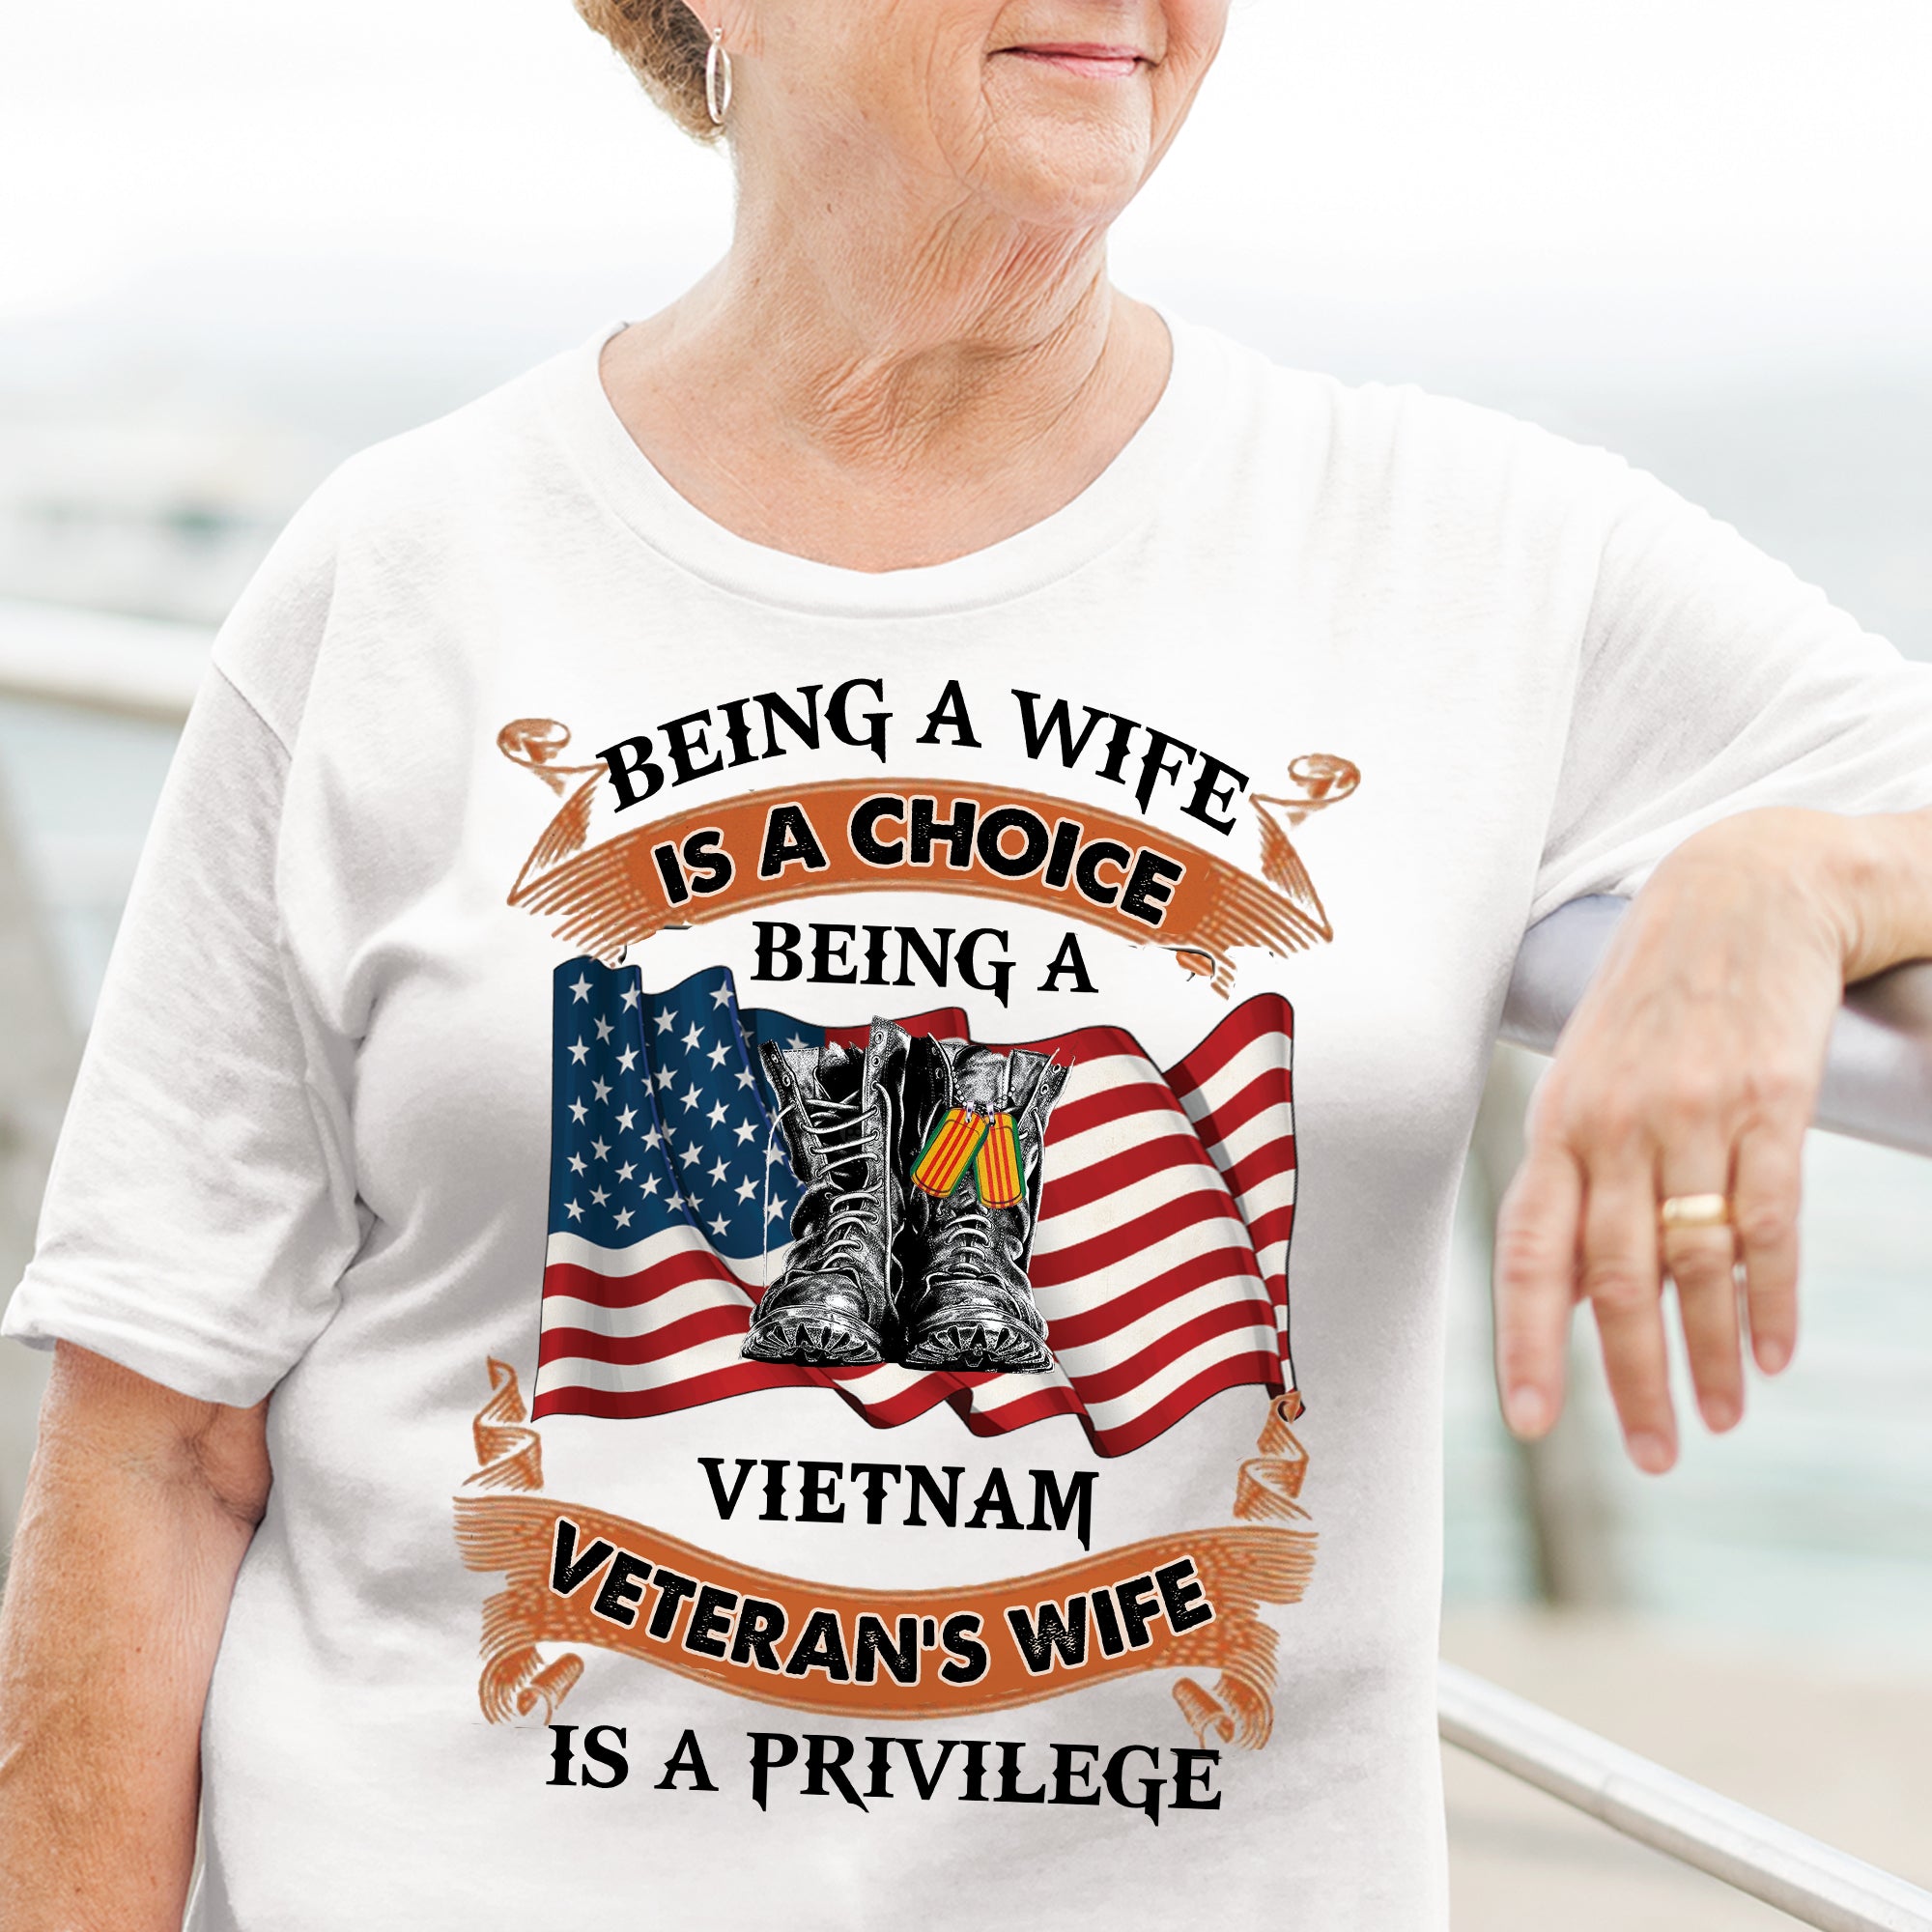 BEING A VIETNAM VETERAN'S WIFE IS A PRIVILEGE T-SHIRT